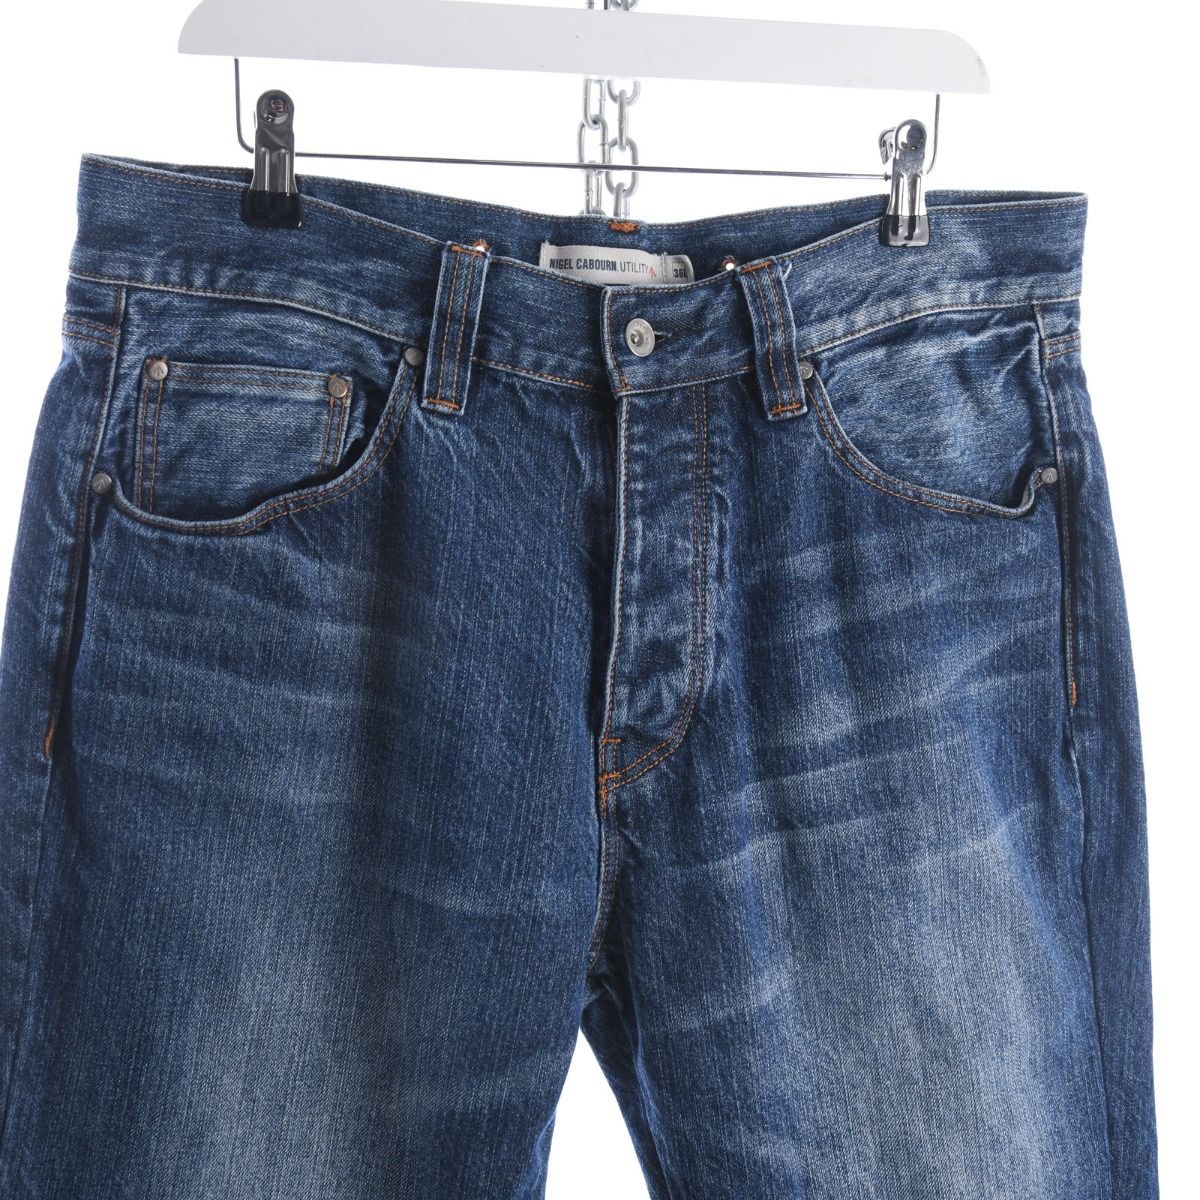 Nigel Cabourn Utility Slim Jeans